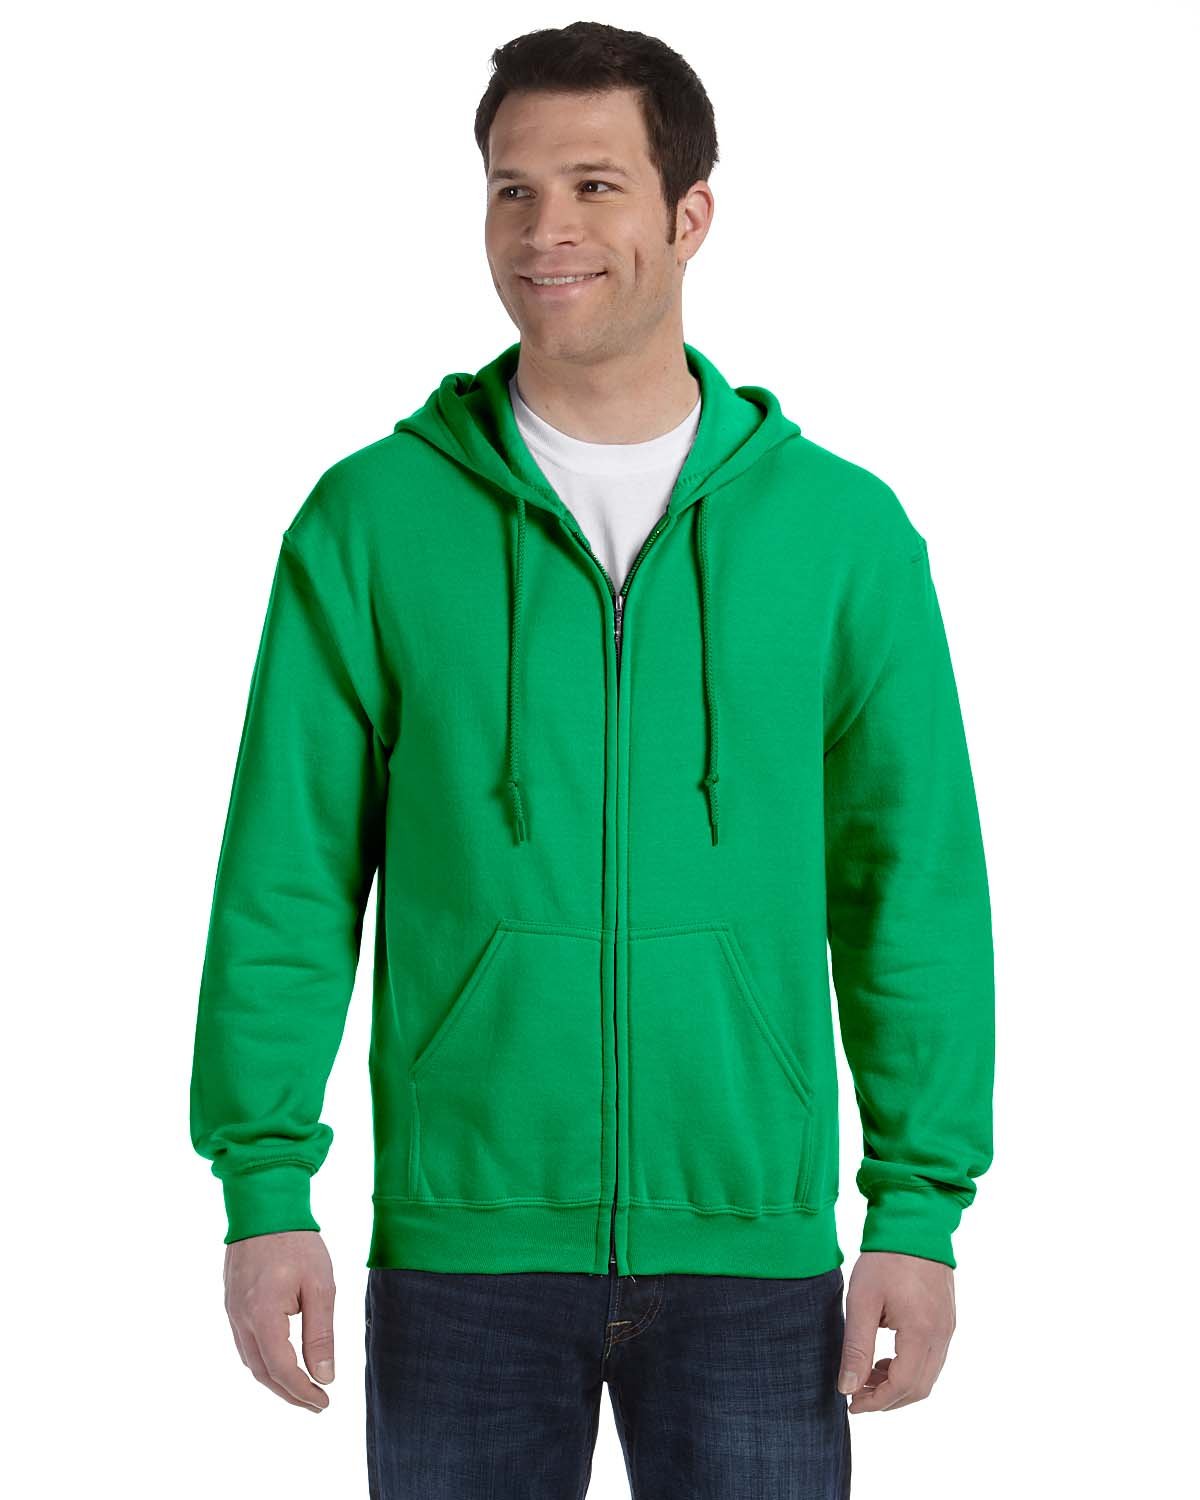 Gildan 18600 Size Chart, Gildan G186 Zipped Sweatshirt Size Table, Hooded  Full Zip Size Guide -  Canada